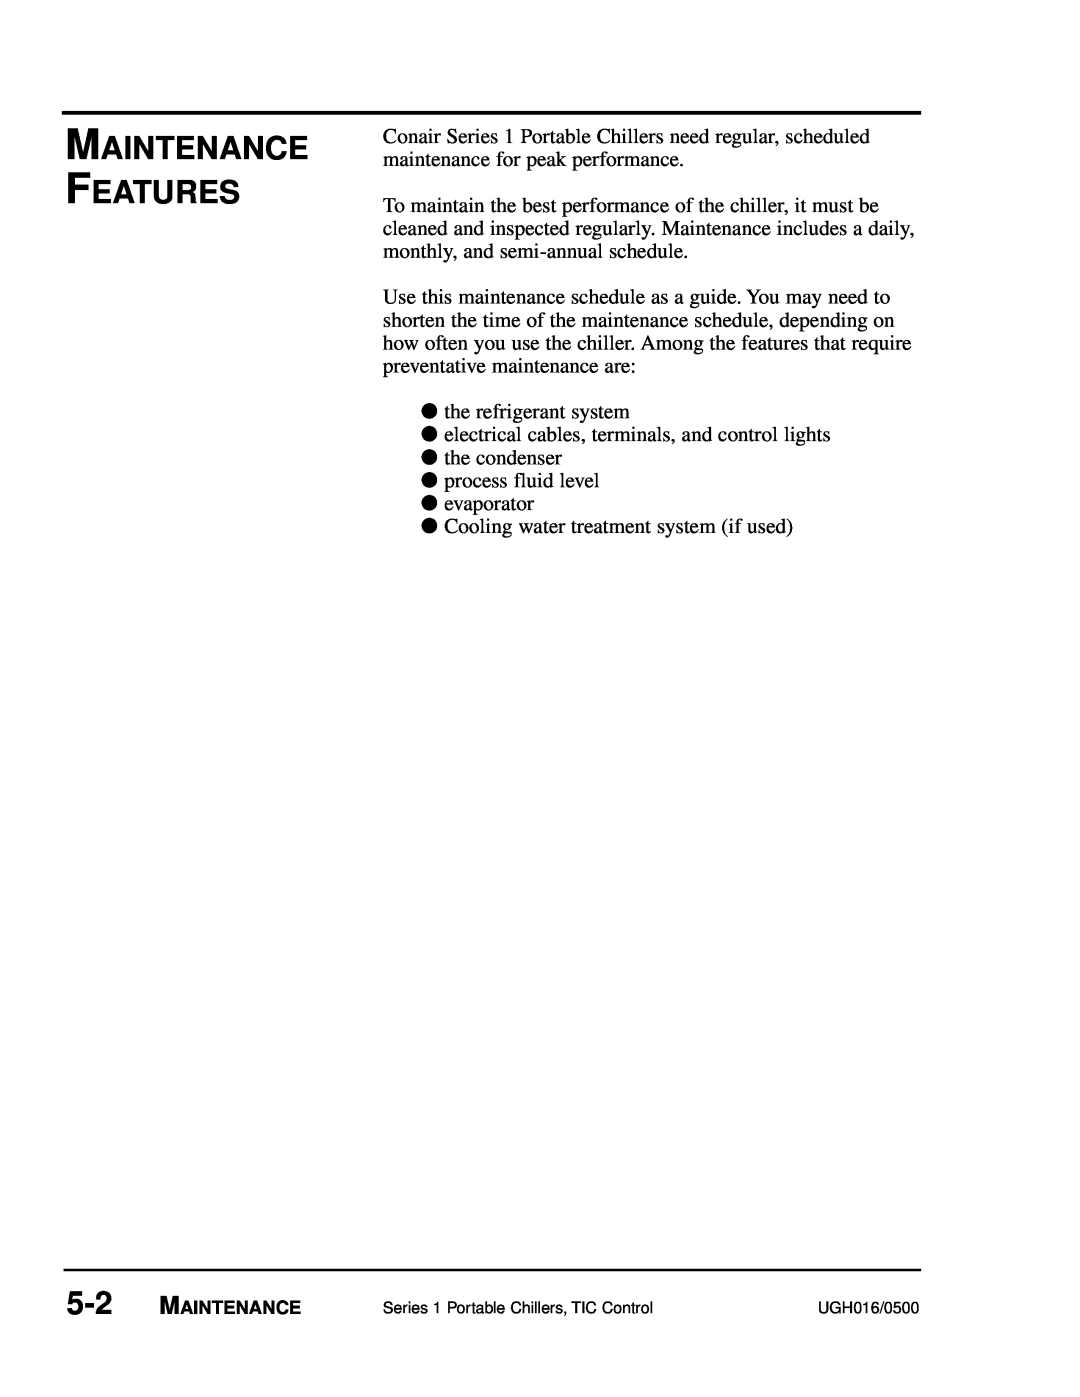 Conair UGH016/0500 manual Maintenance Features 